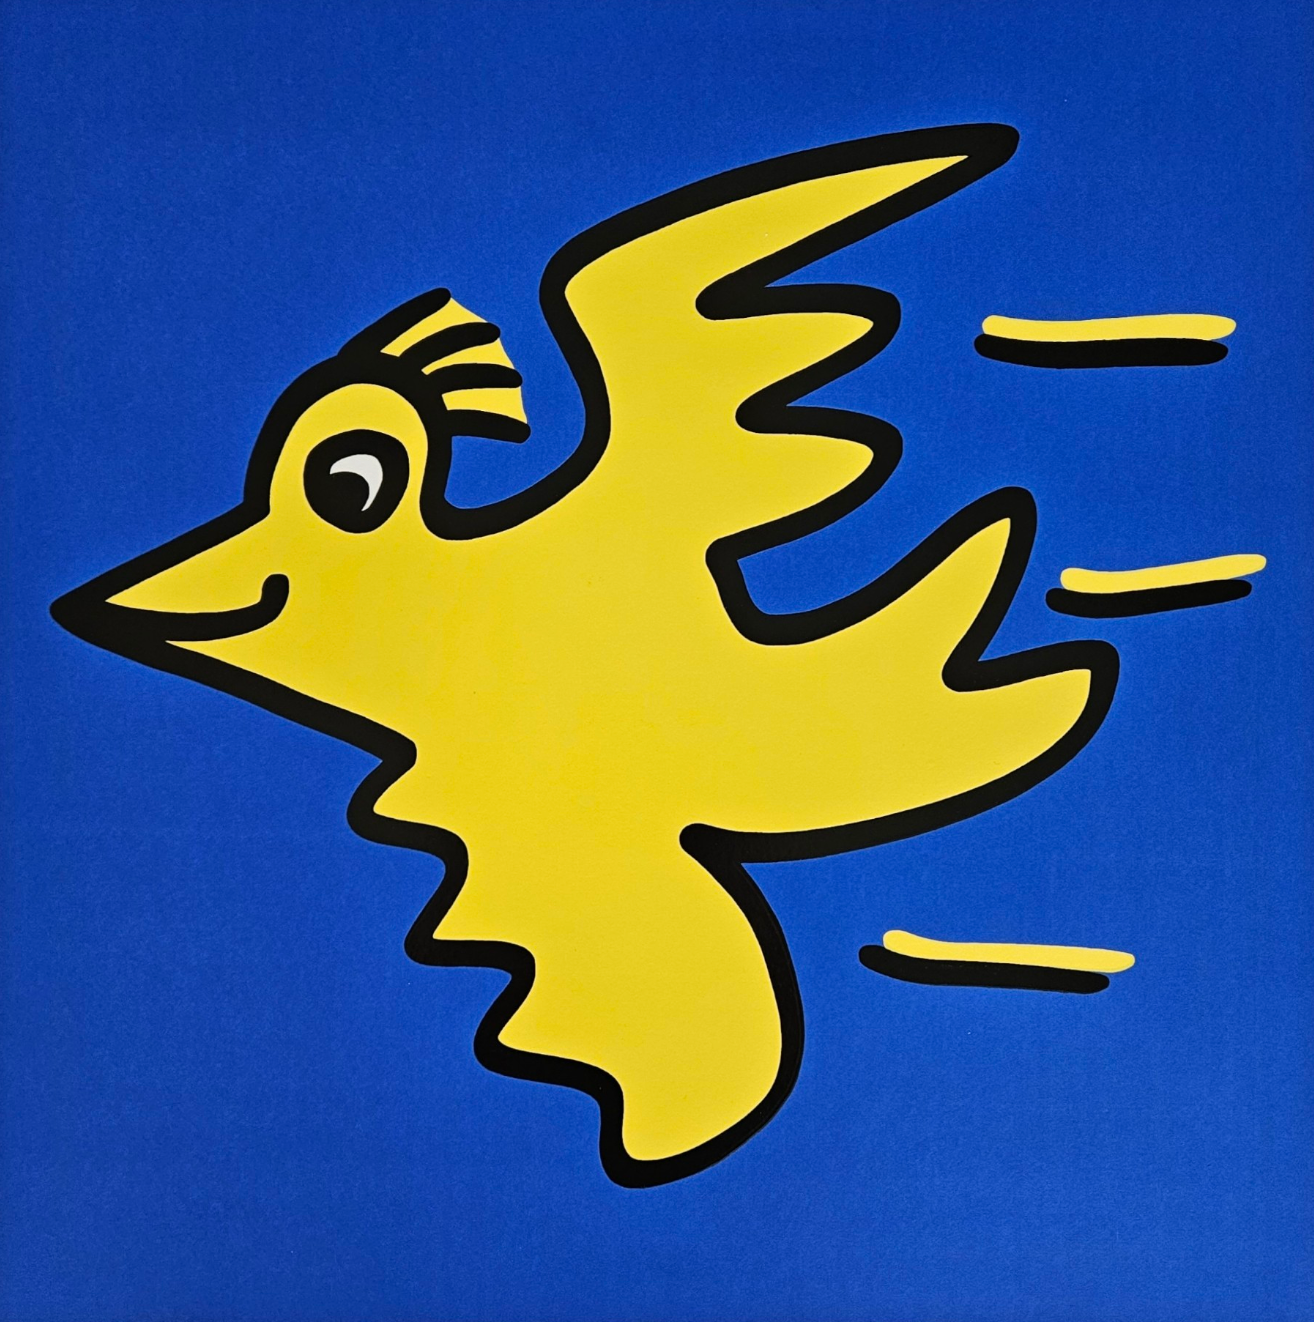 James Rizzi - Icon "BIRD" (2008)